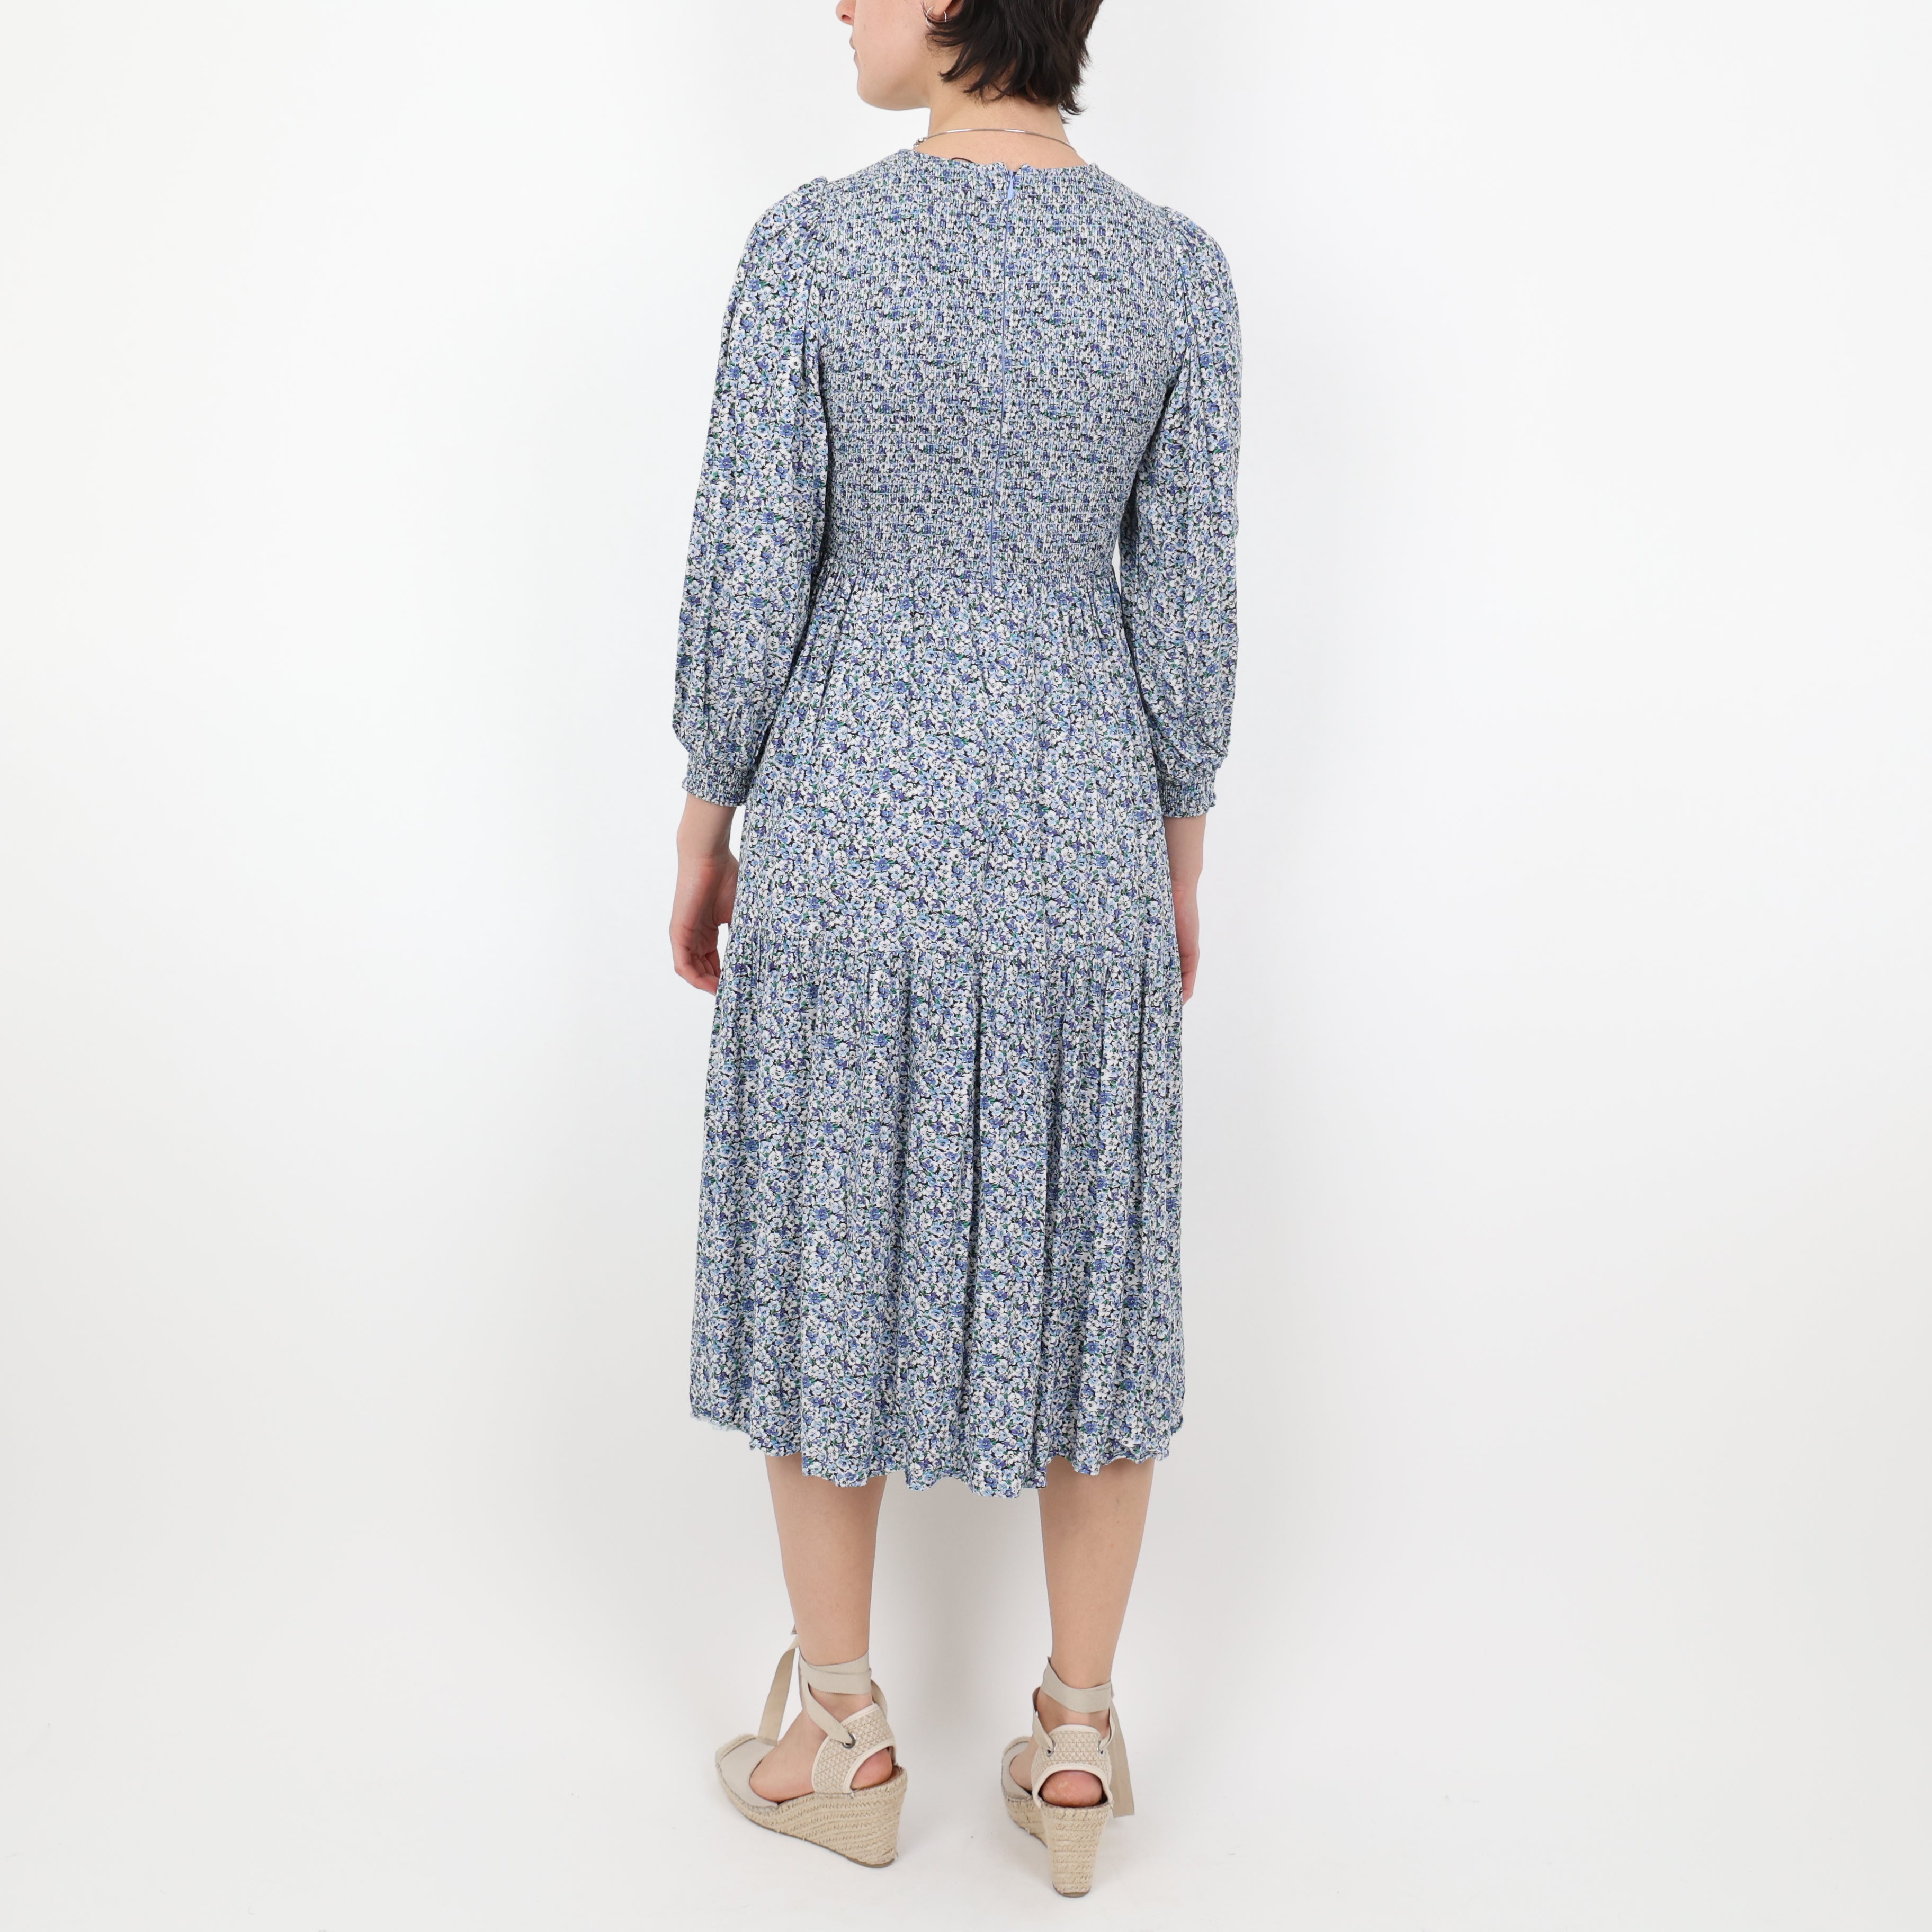 Dress, UK Size 4